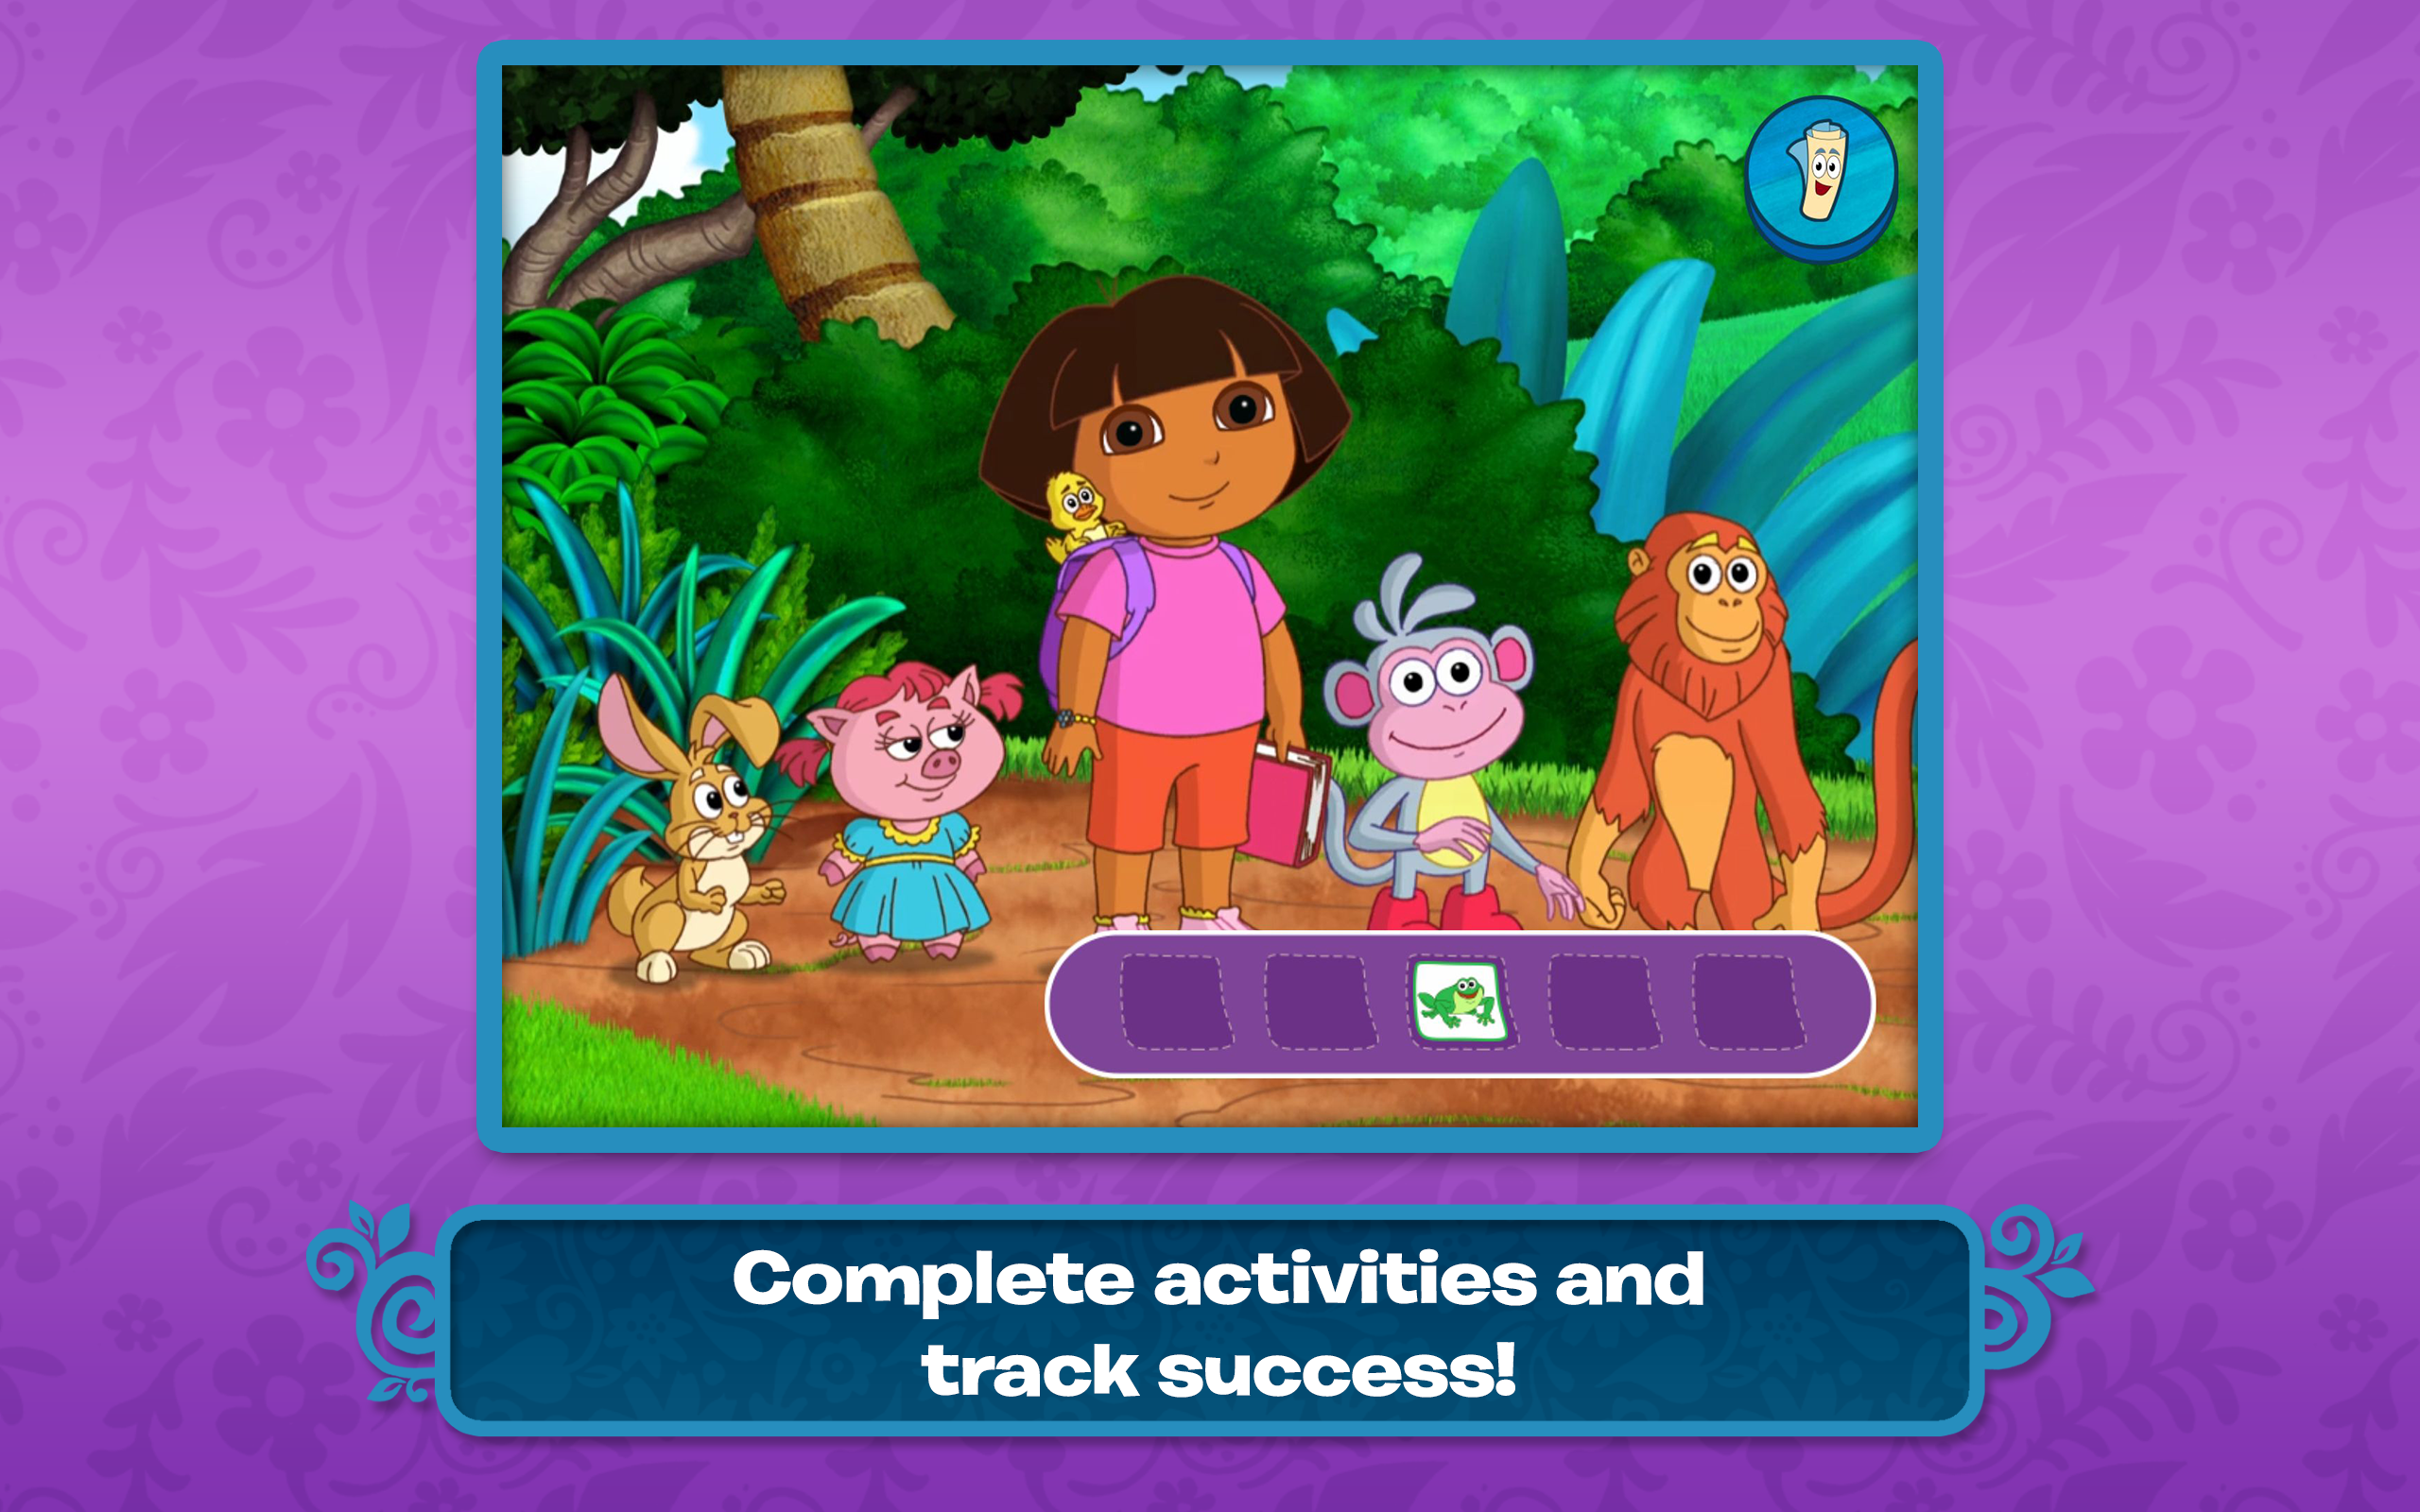 Dora Appisode: Check-Up Day! screenshot game